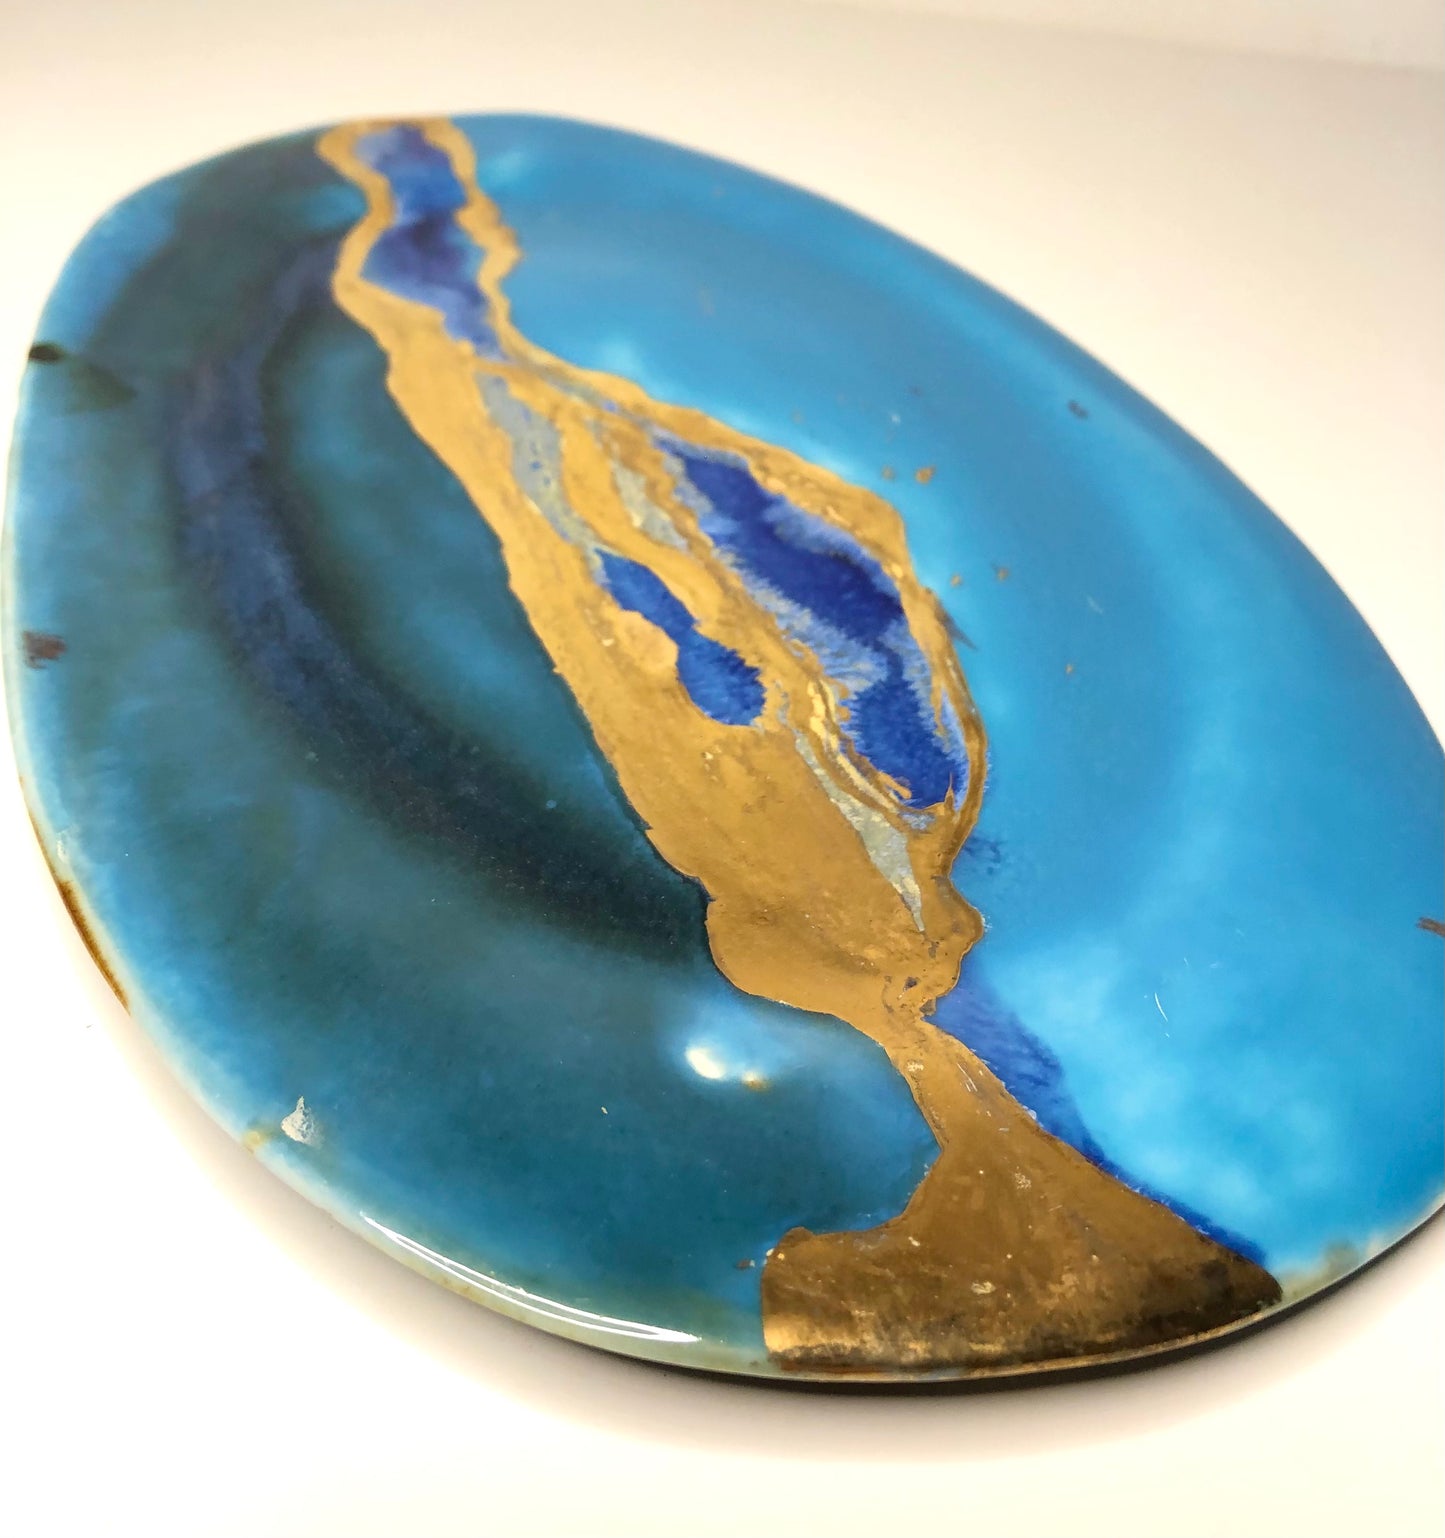 Mediteranean Seascape Platter